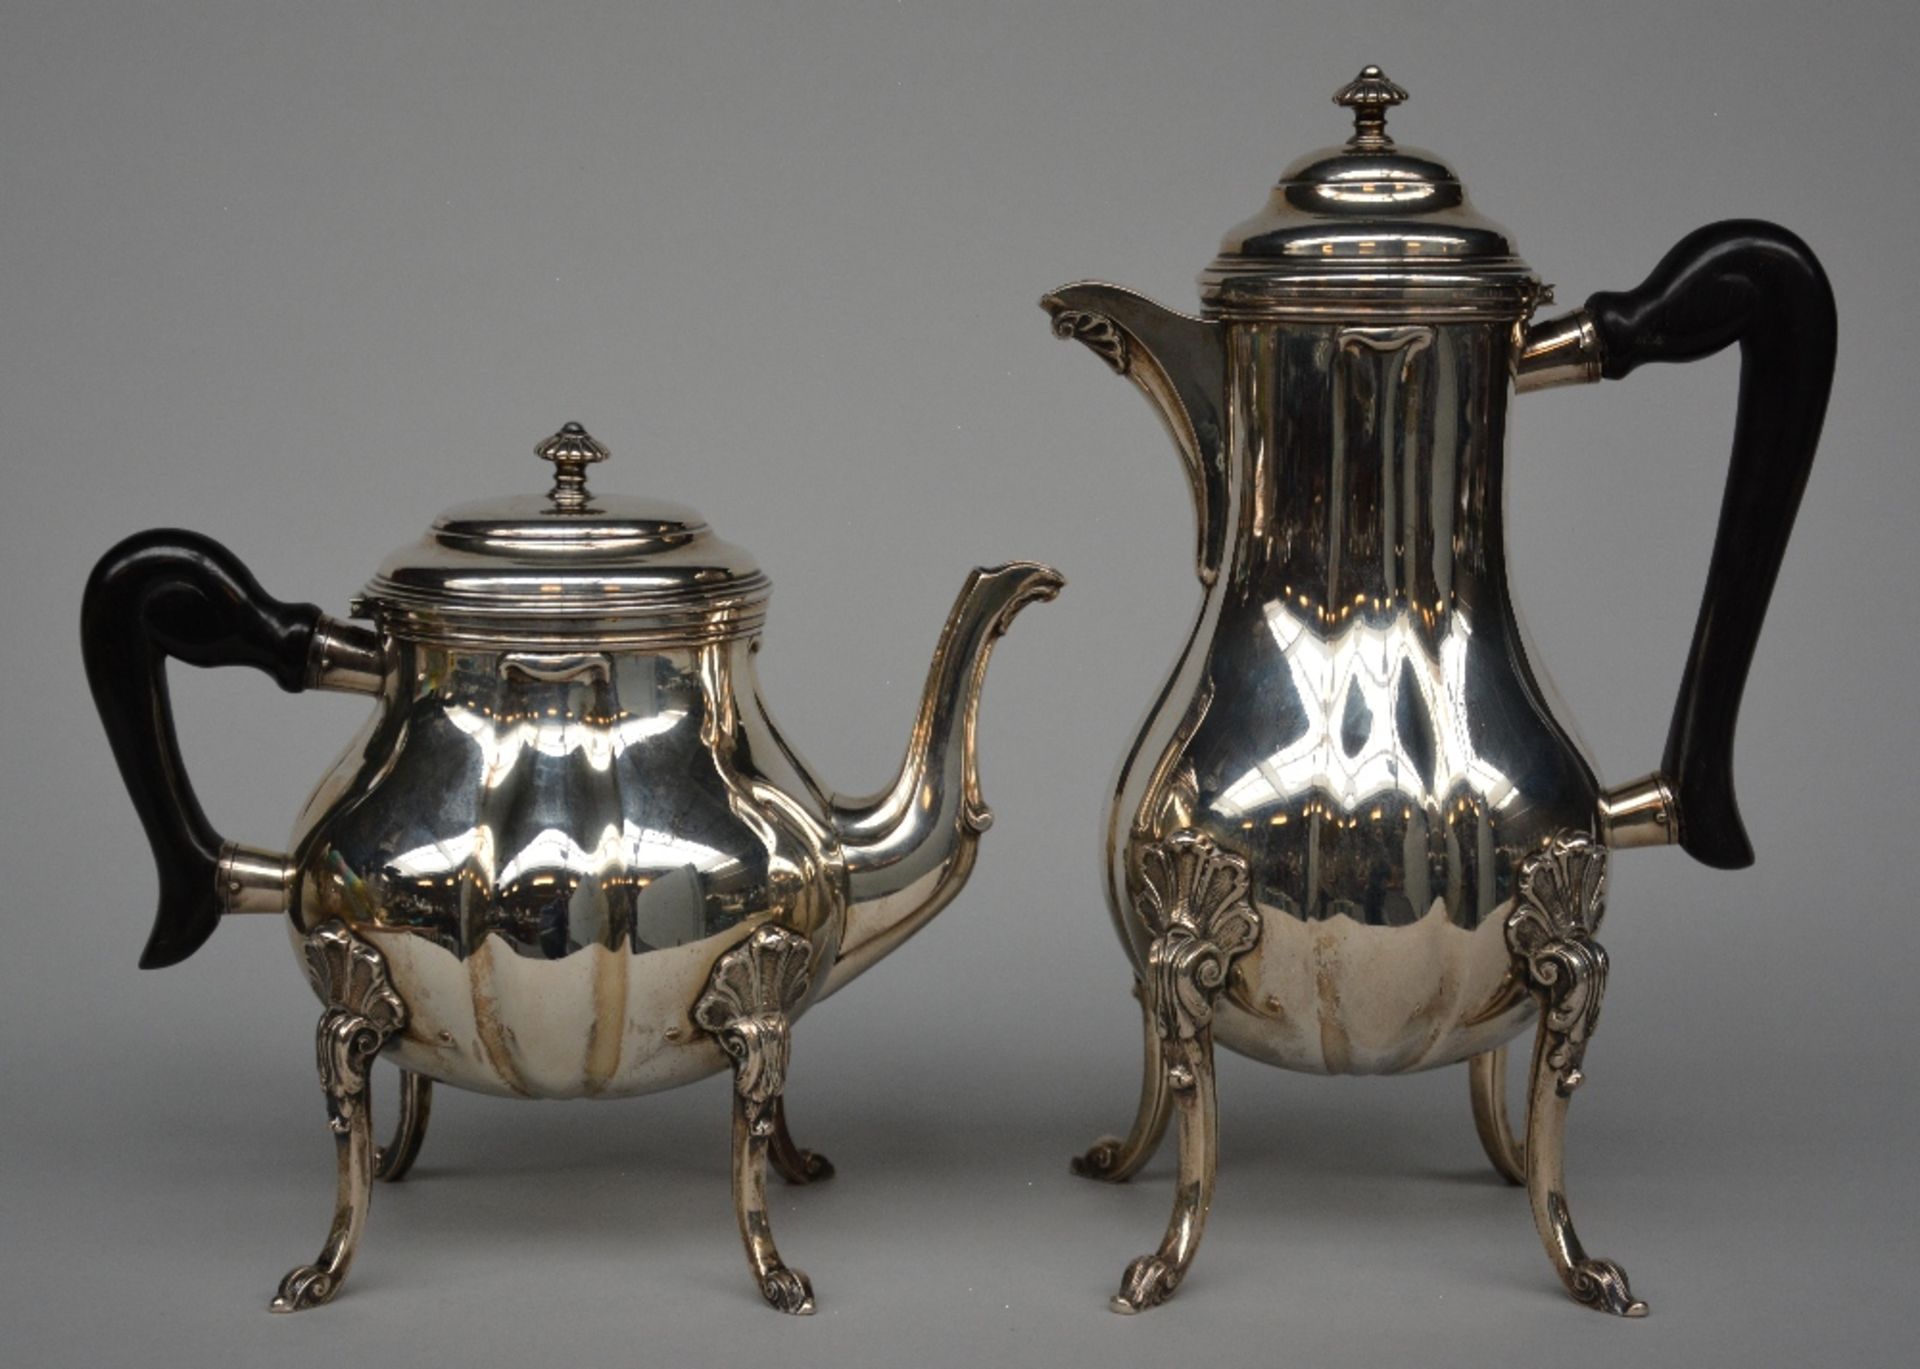 A four-piece silver coffee and tea set, Belgium 1868 - 1942, 800/000, makers' mark, Delheid, H - Bild 3 aus 4